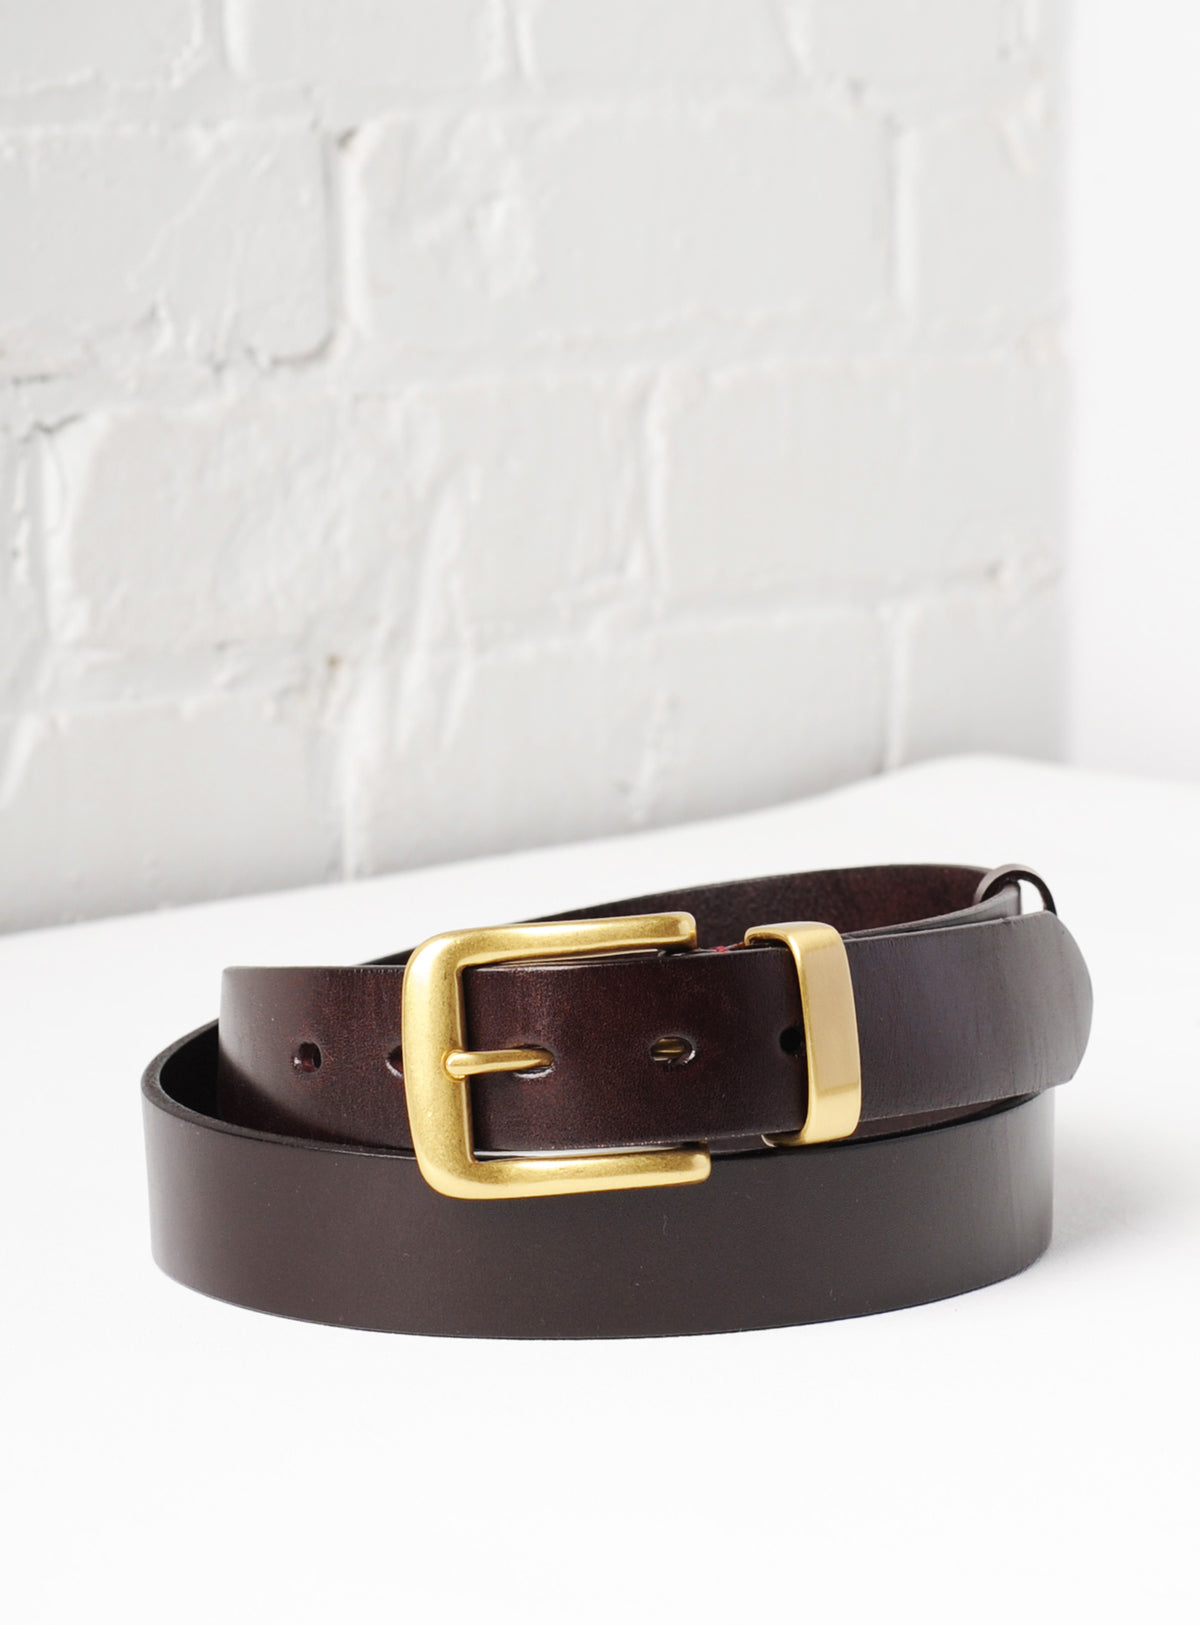 Veneto' Italian Leather Belt - Espresso – Uppdoo Design Studio